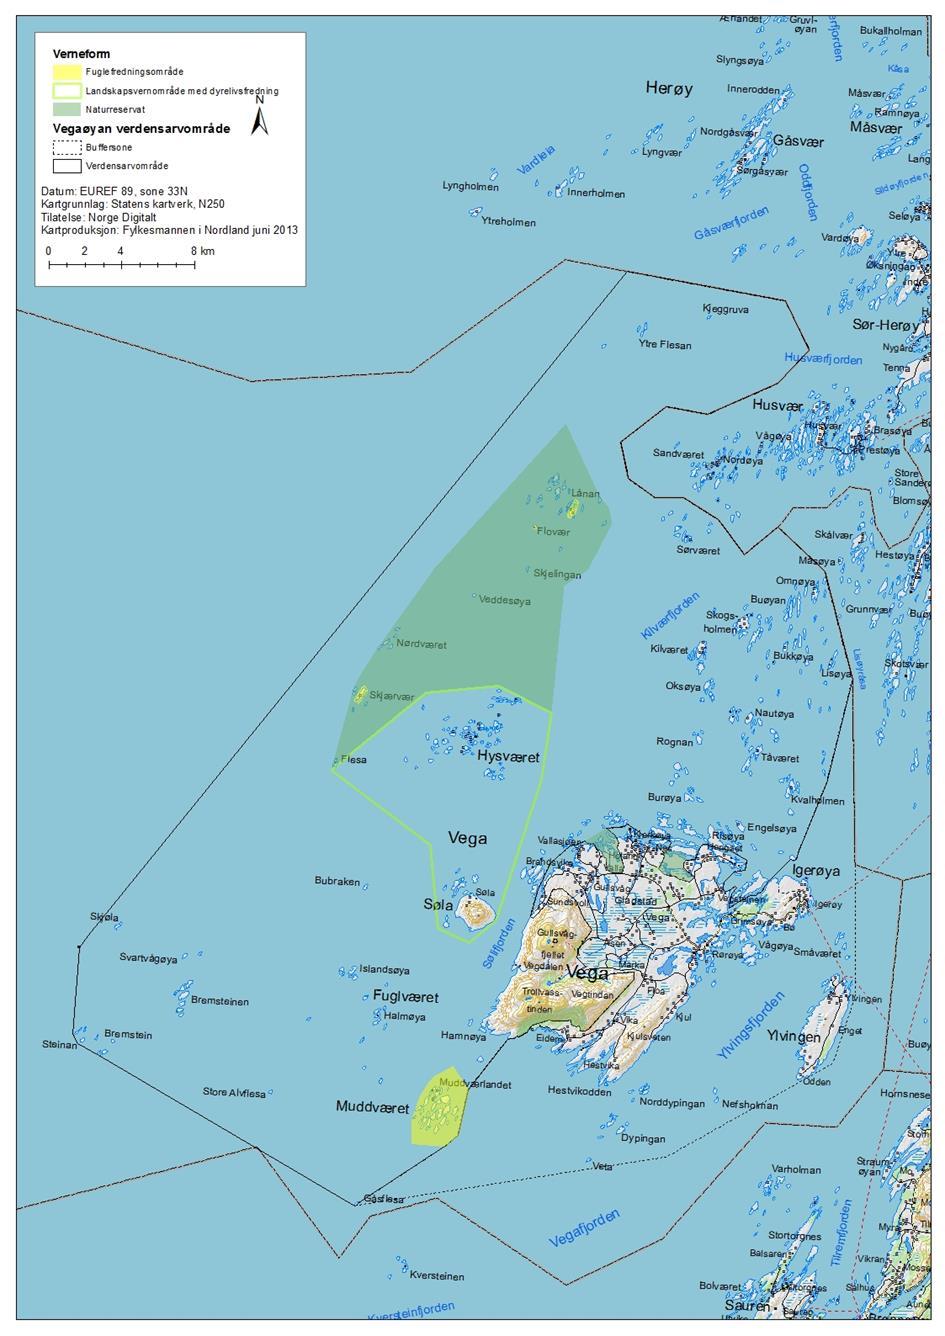 Kart over Vegaøyan verdensarvområde og